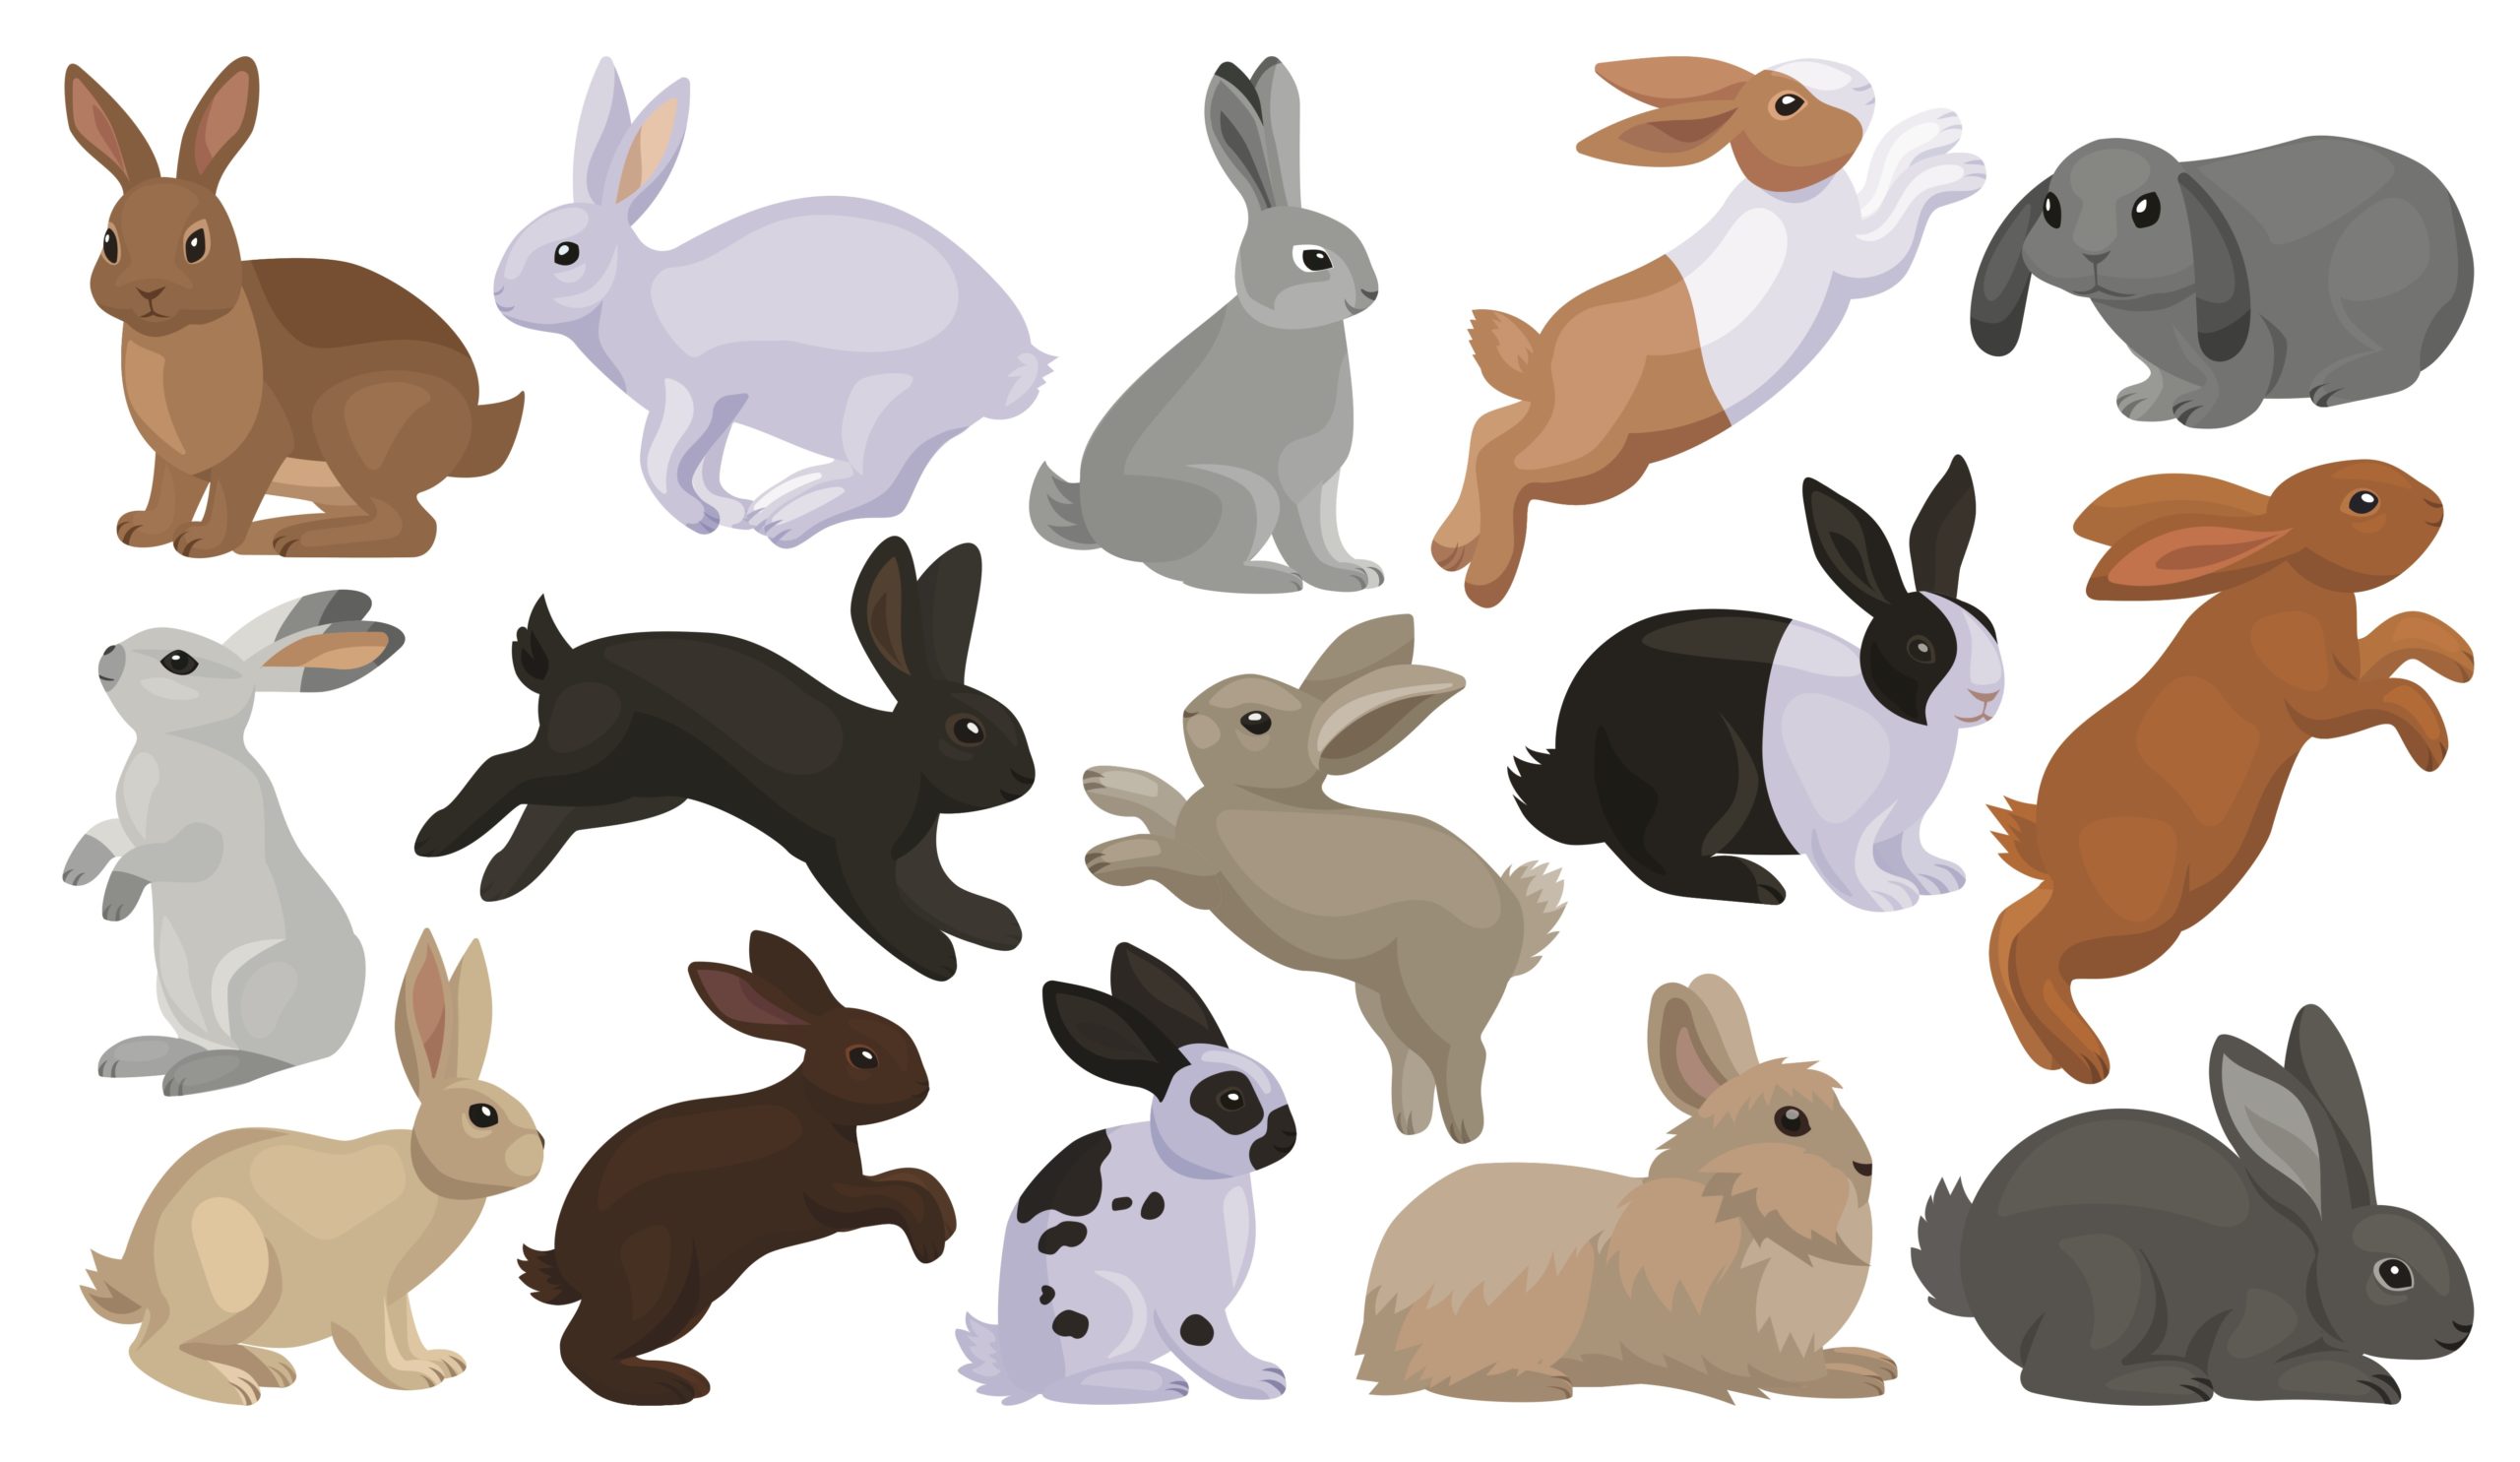 Different rabbit breeds